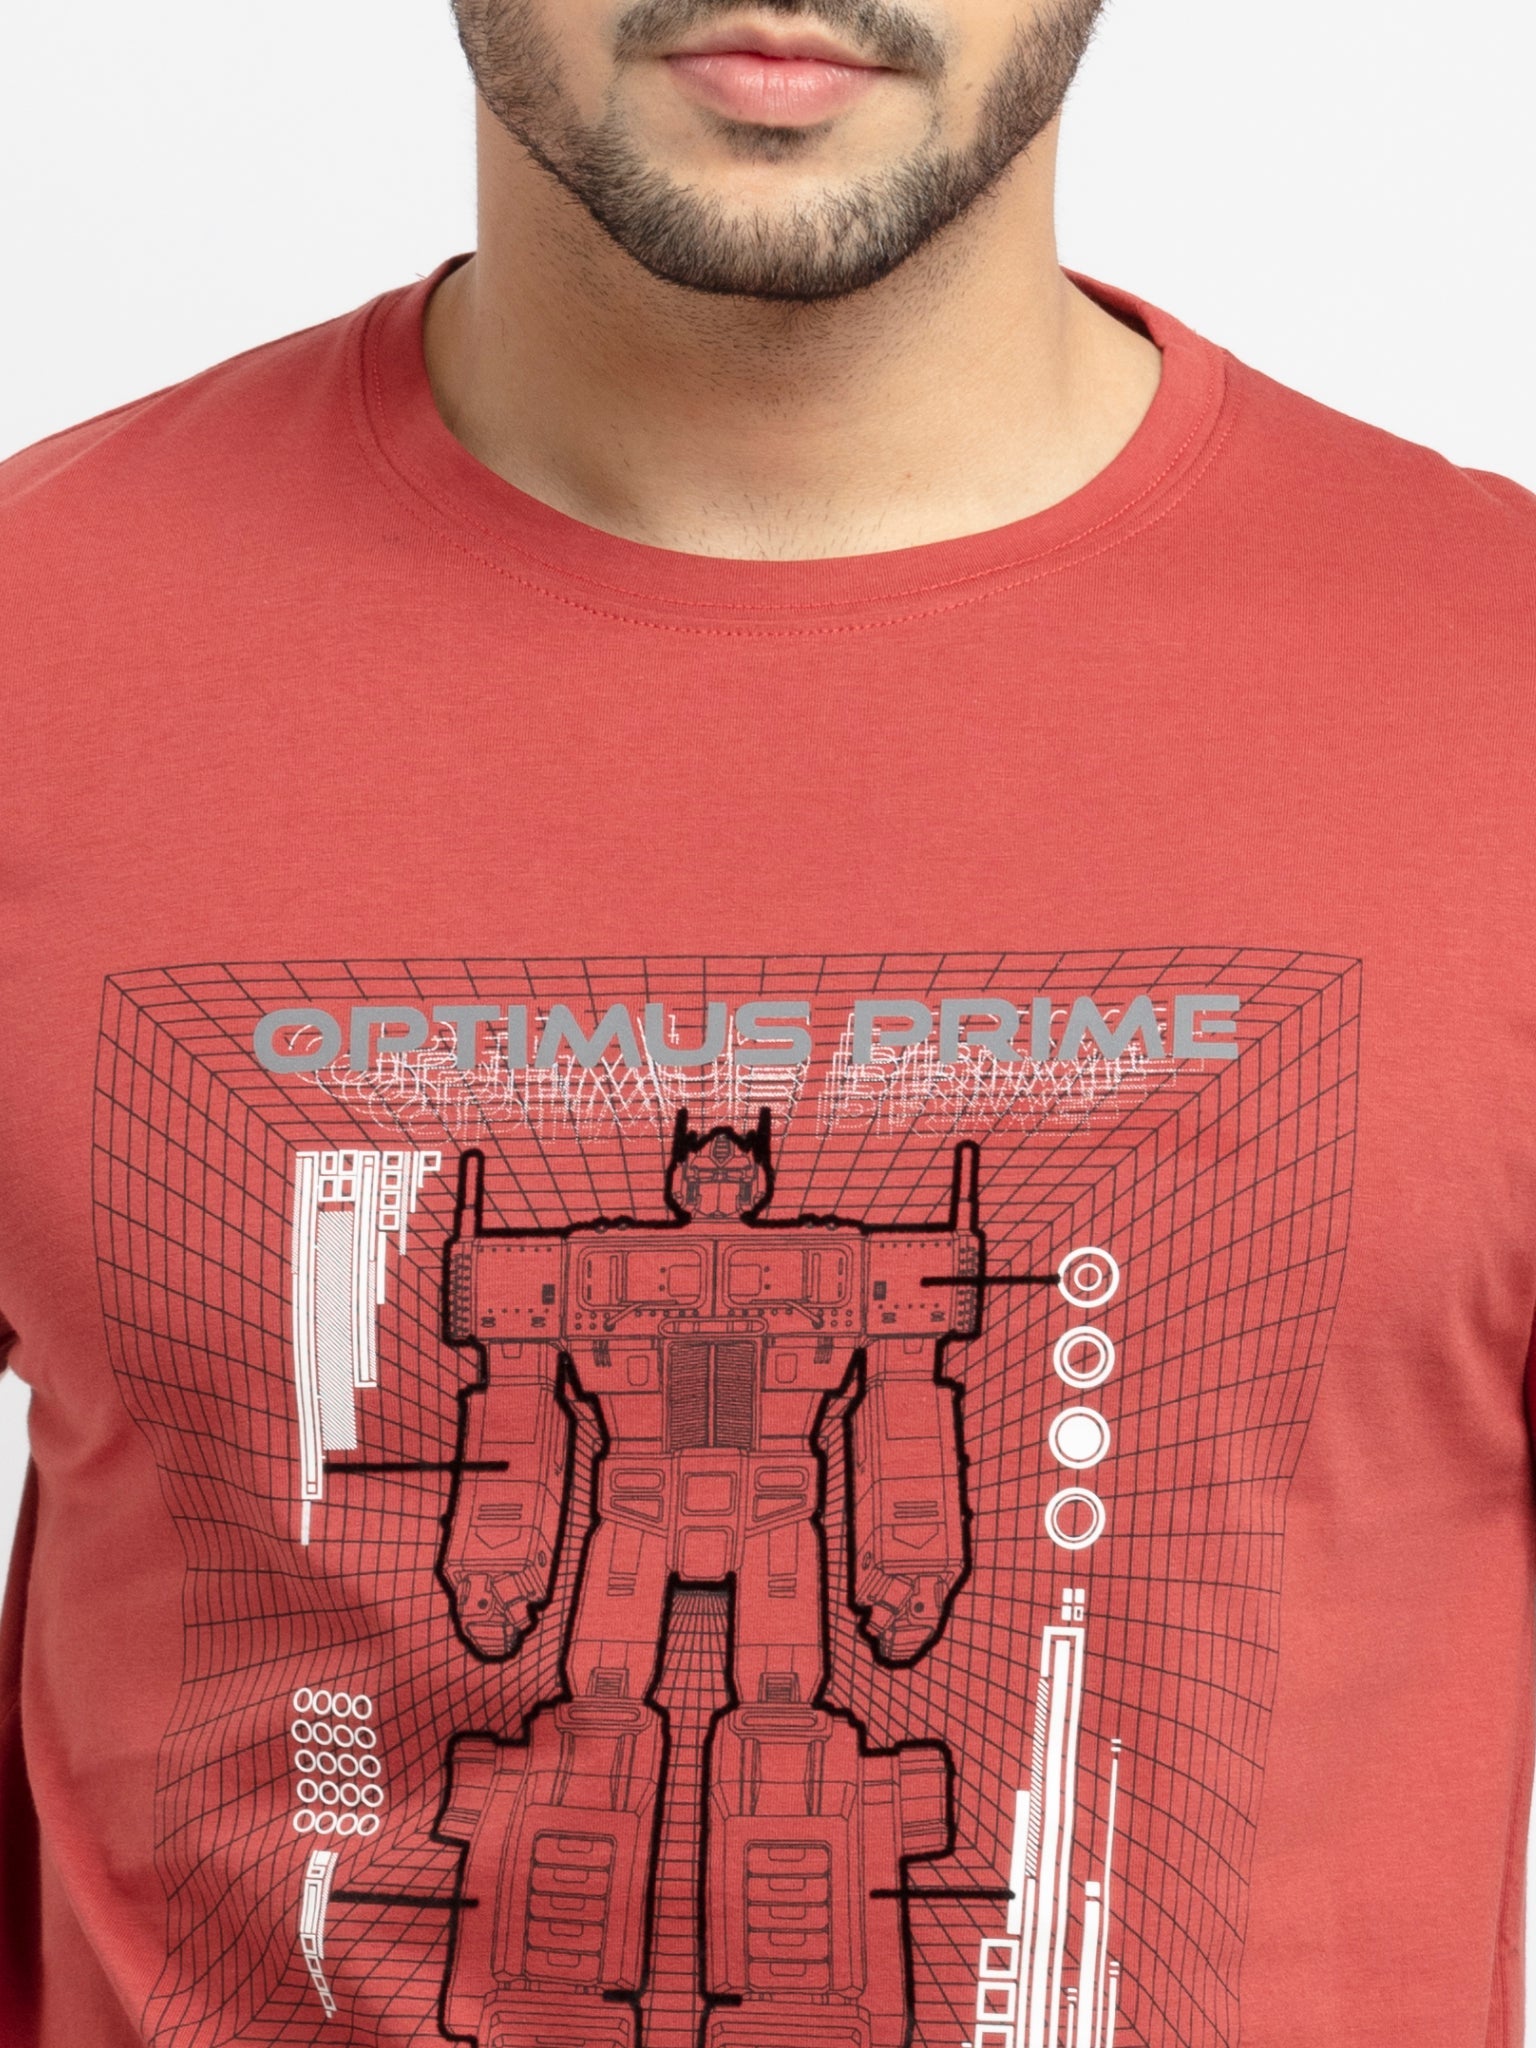 Mens Transformers Printed T-Shirt